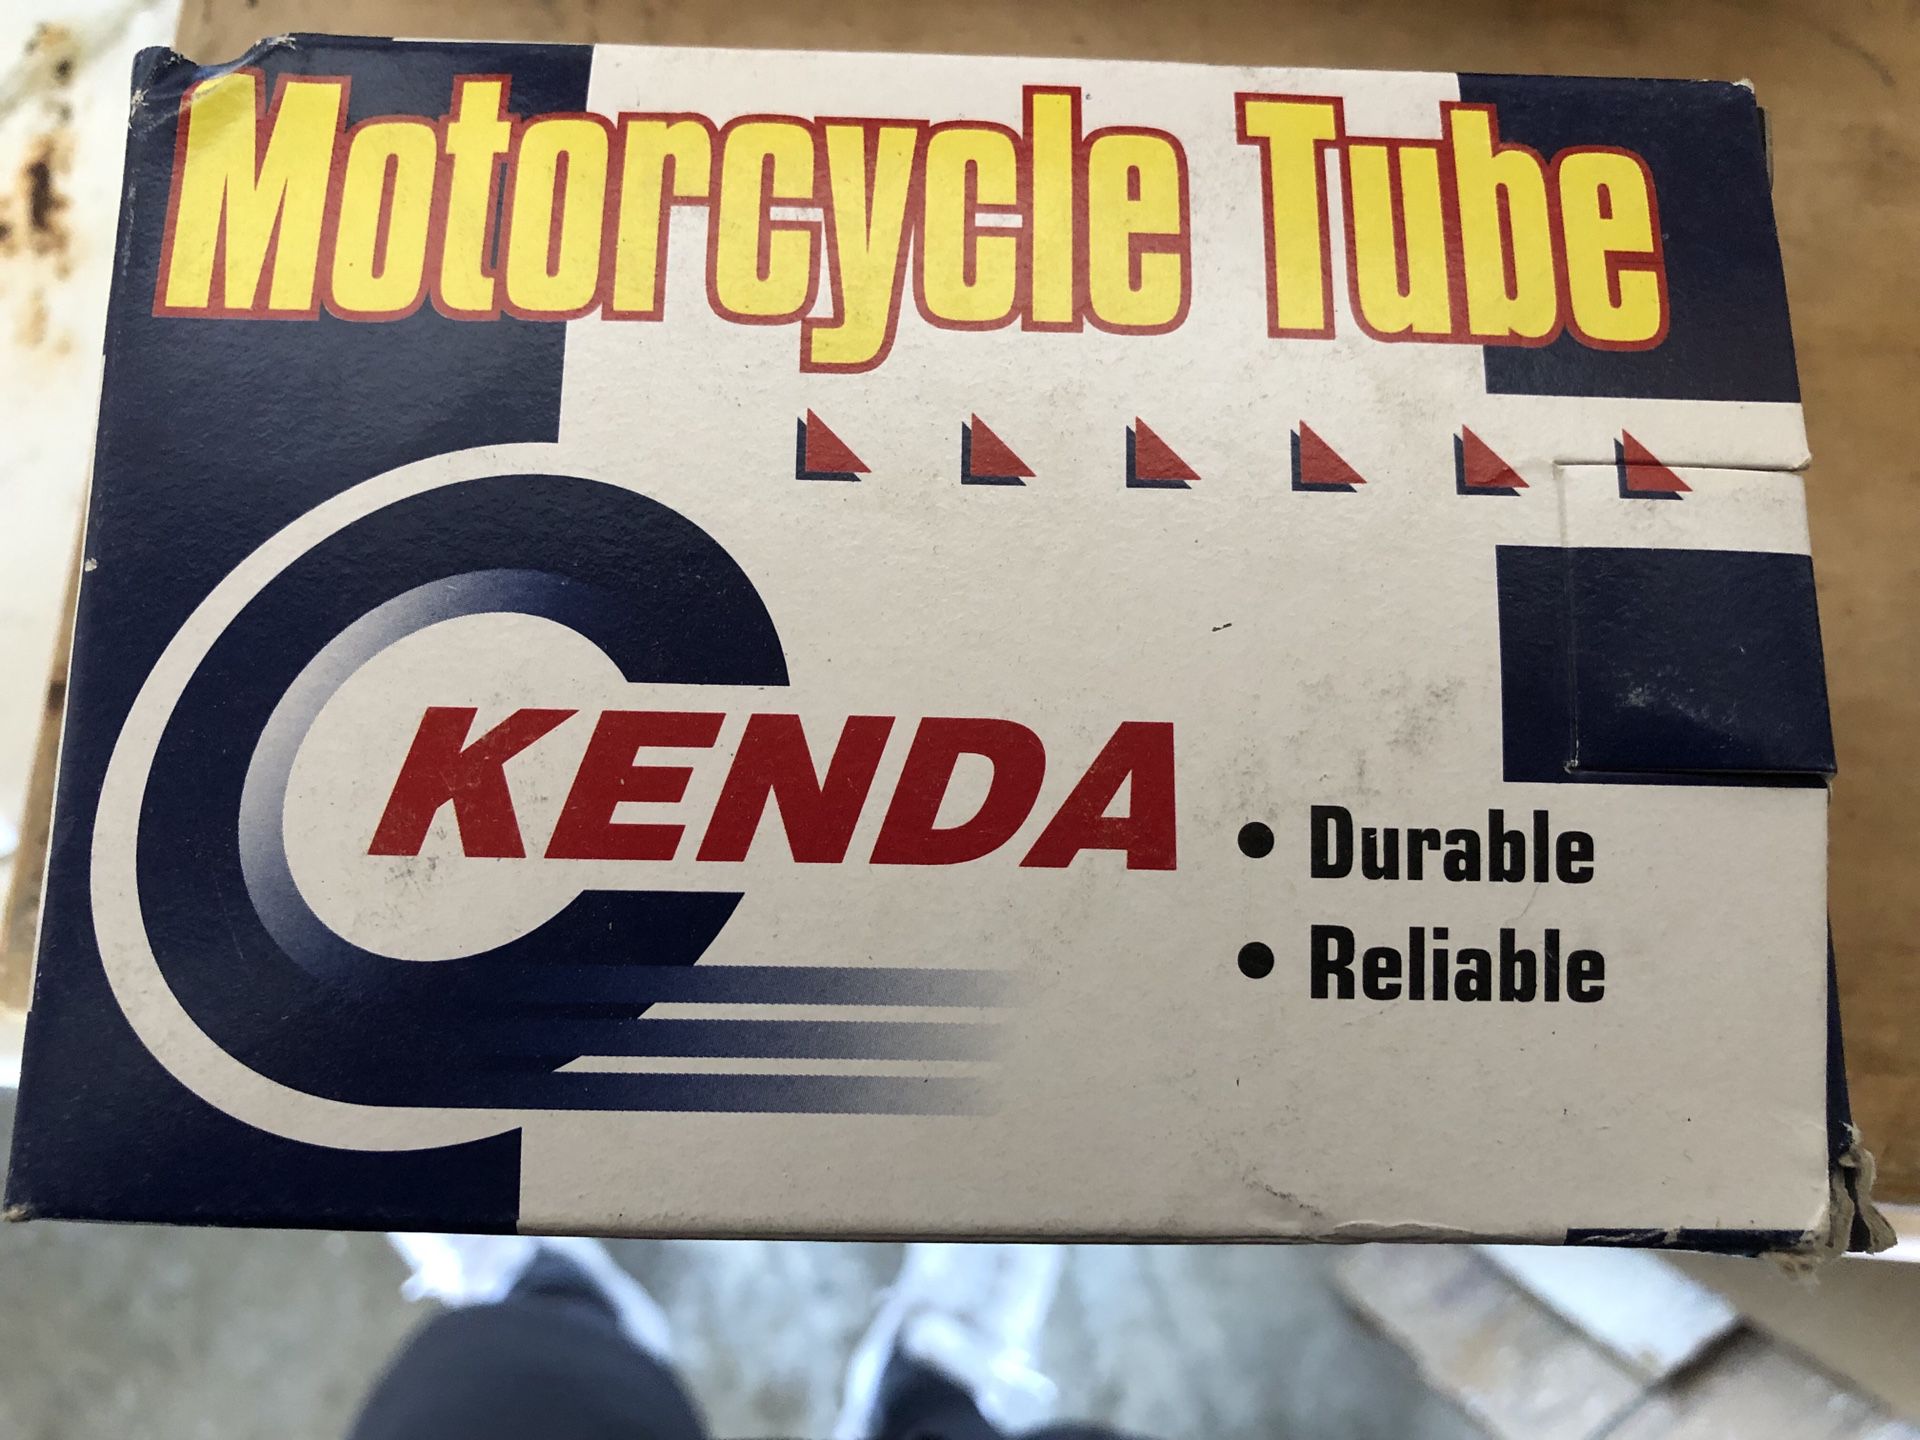 Motorcycle/Dirt bike tire tube